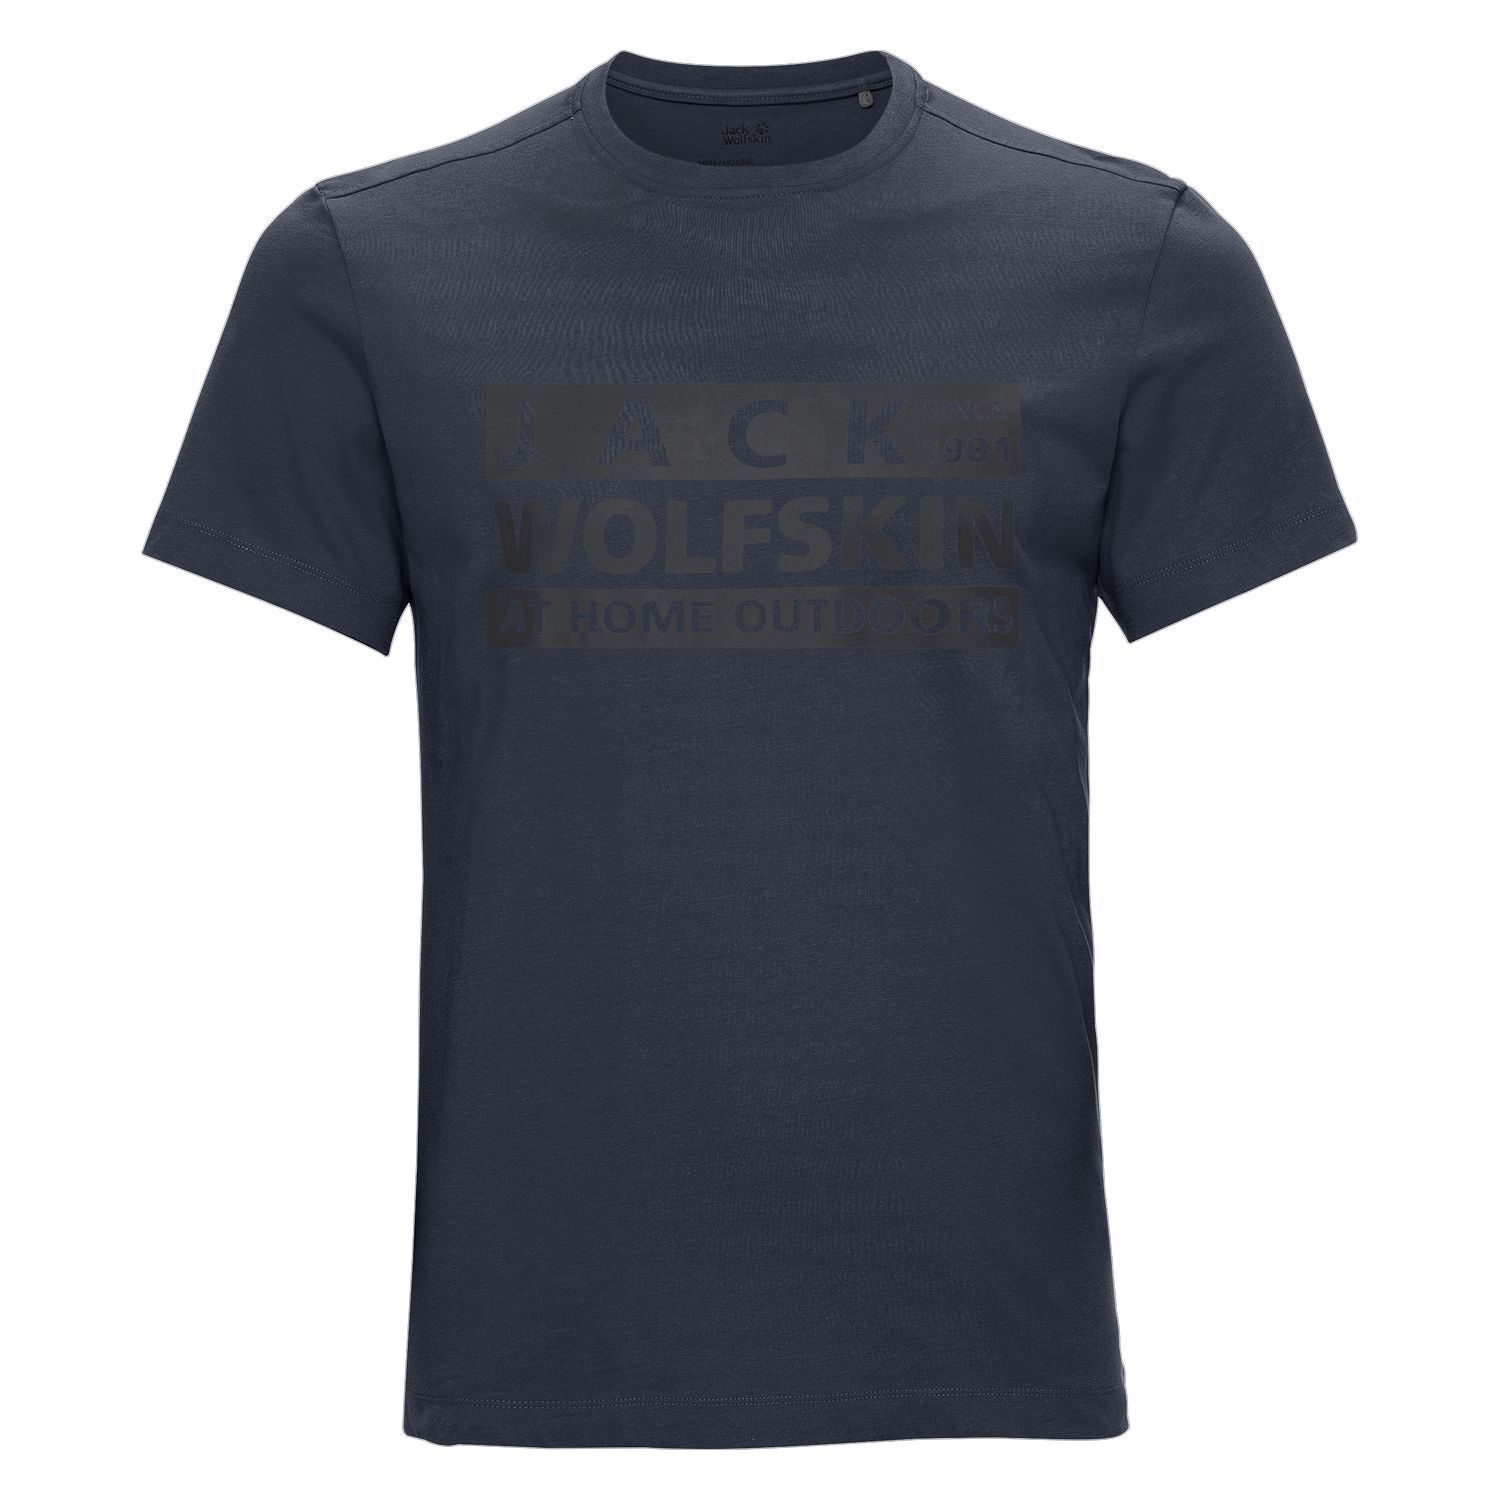 Jack Wolfskin Brand T-Shirt - Mens (Night Blue)